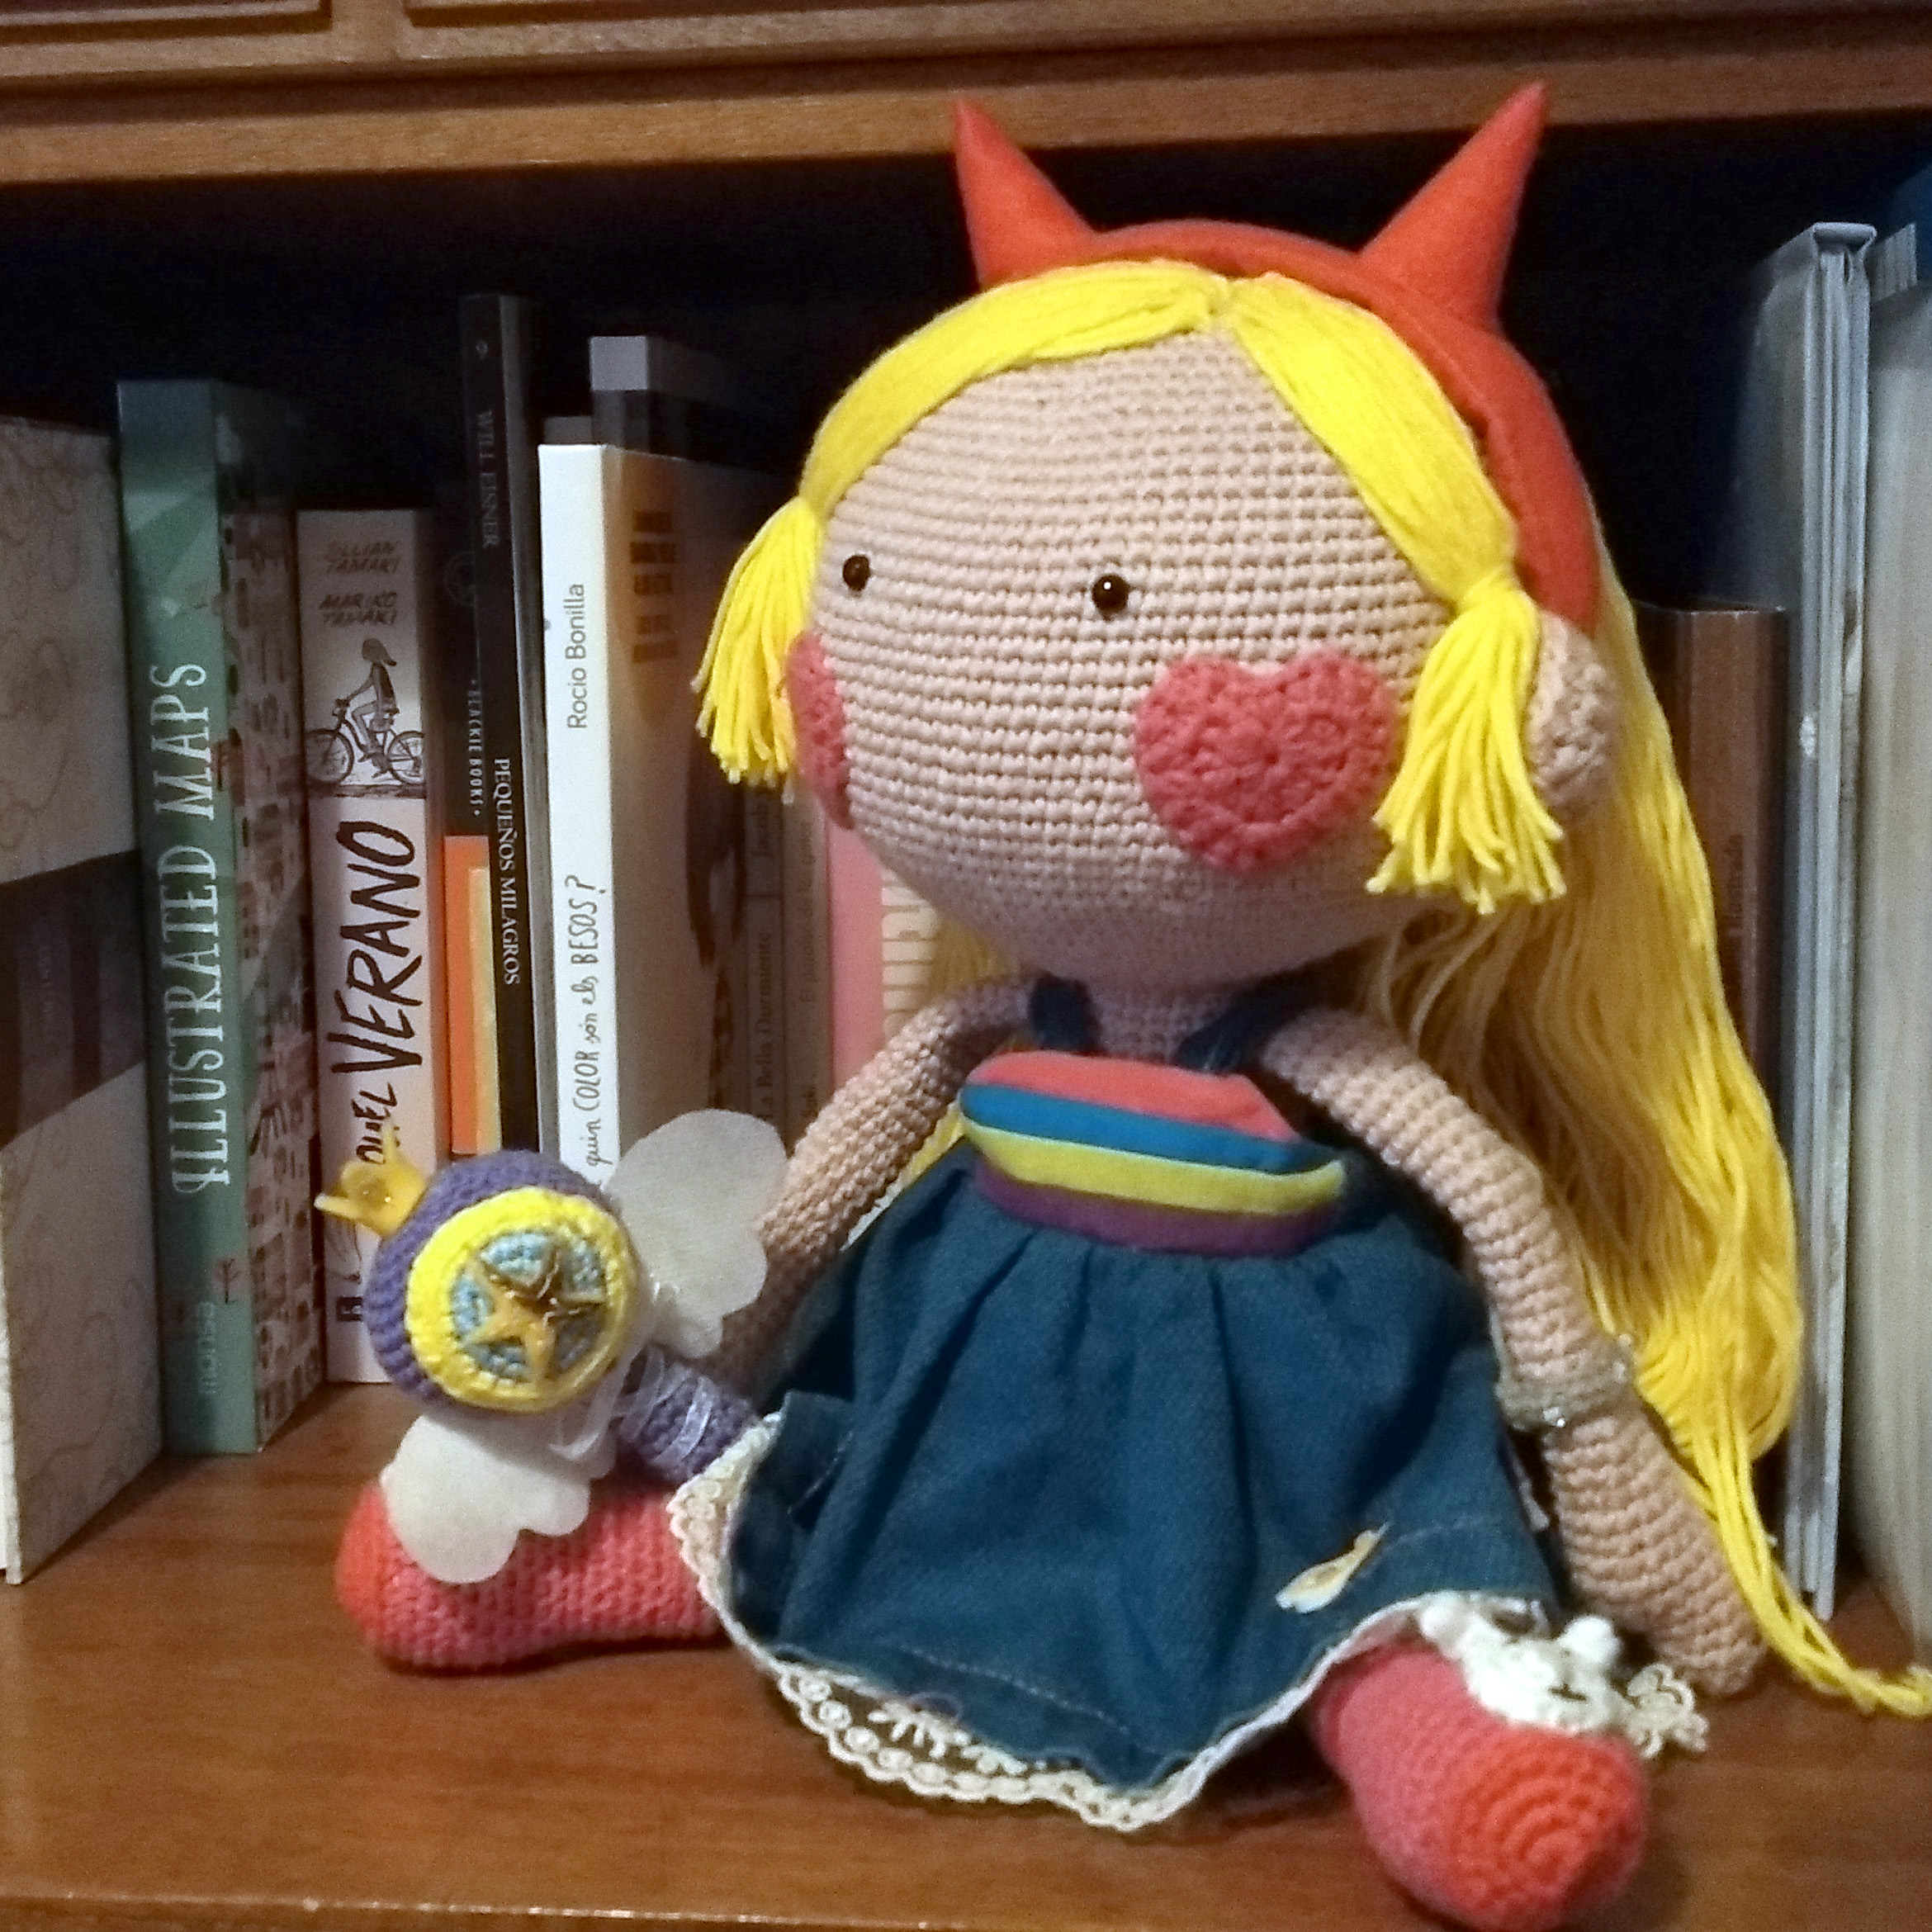 Star Butterfly crochet doll photo